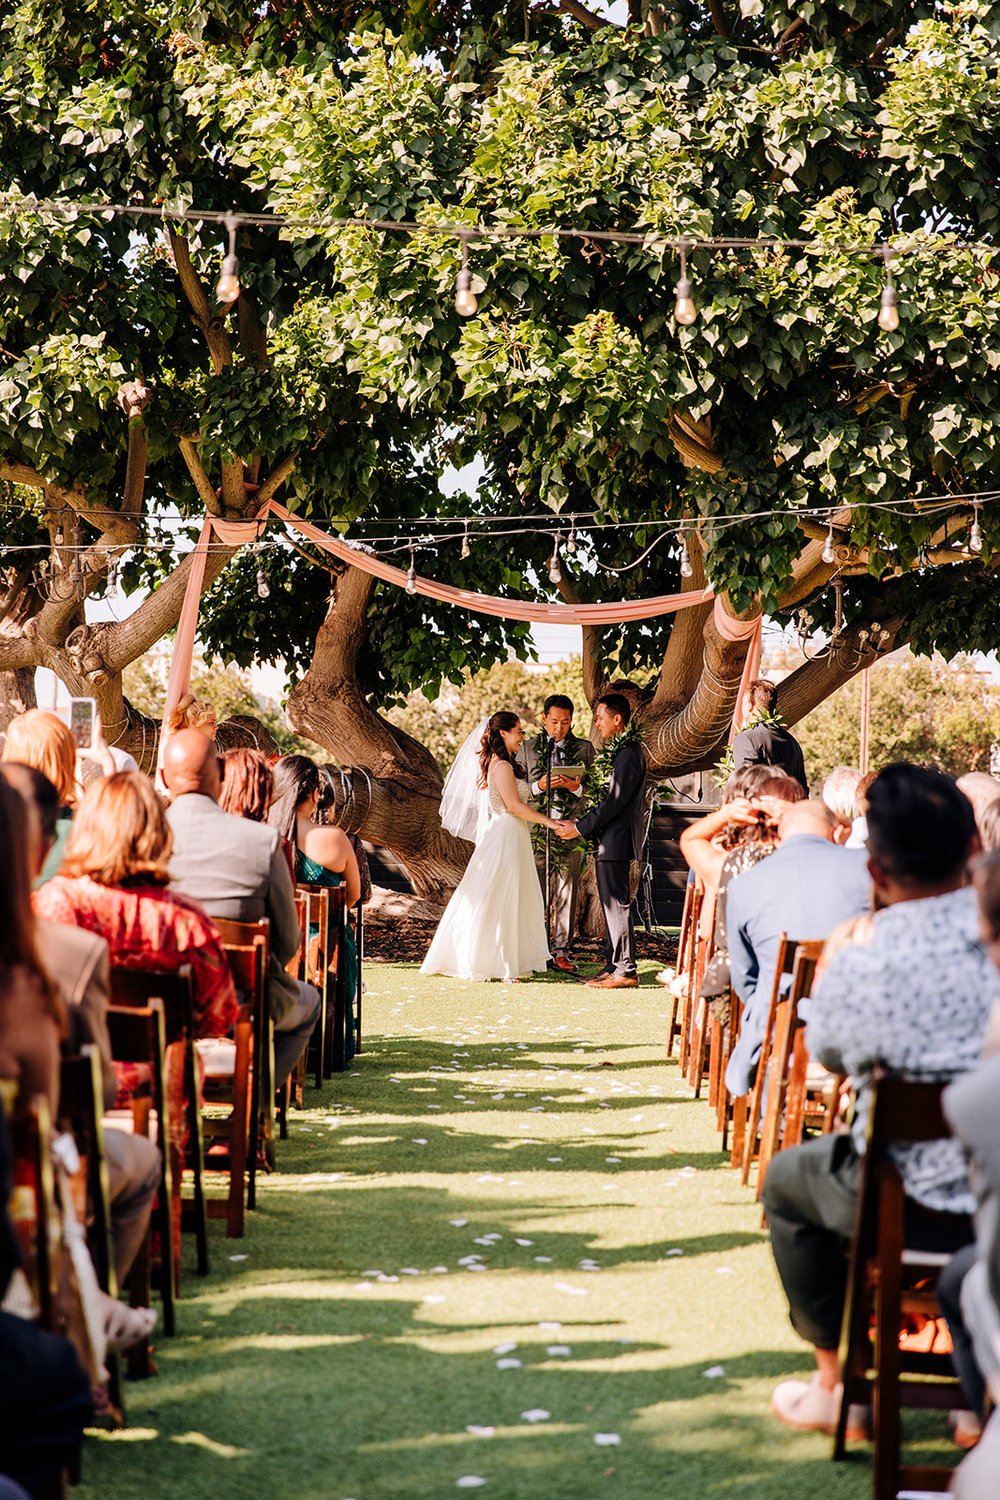 intimate weddings, Orange County wedding photographer, OC wedding photographer, Intimate wedding photographer, Samoan wedding, Small intimate weddings, perks of an intimate wedding